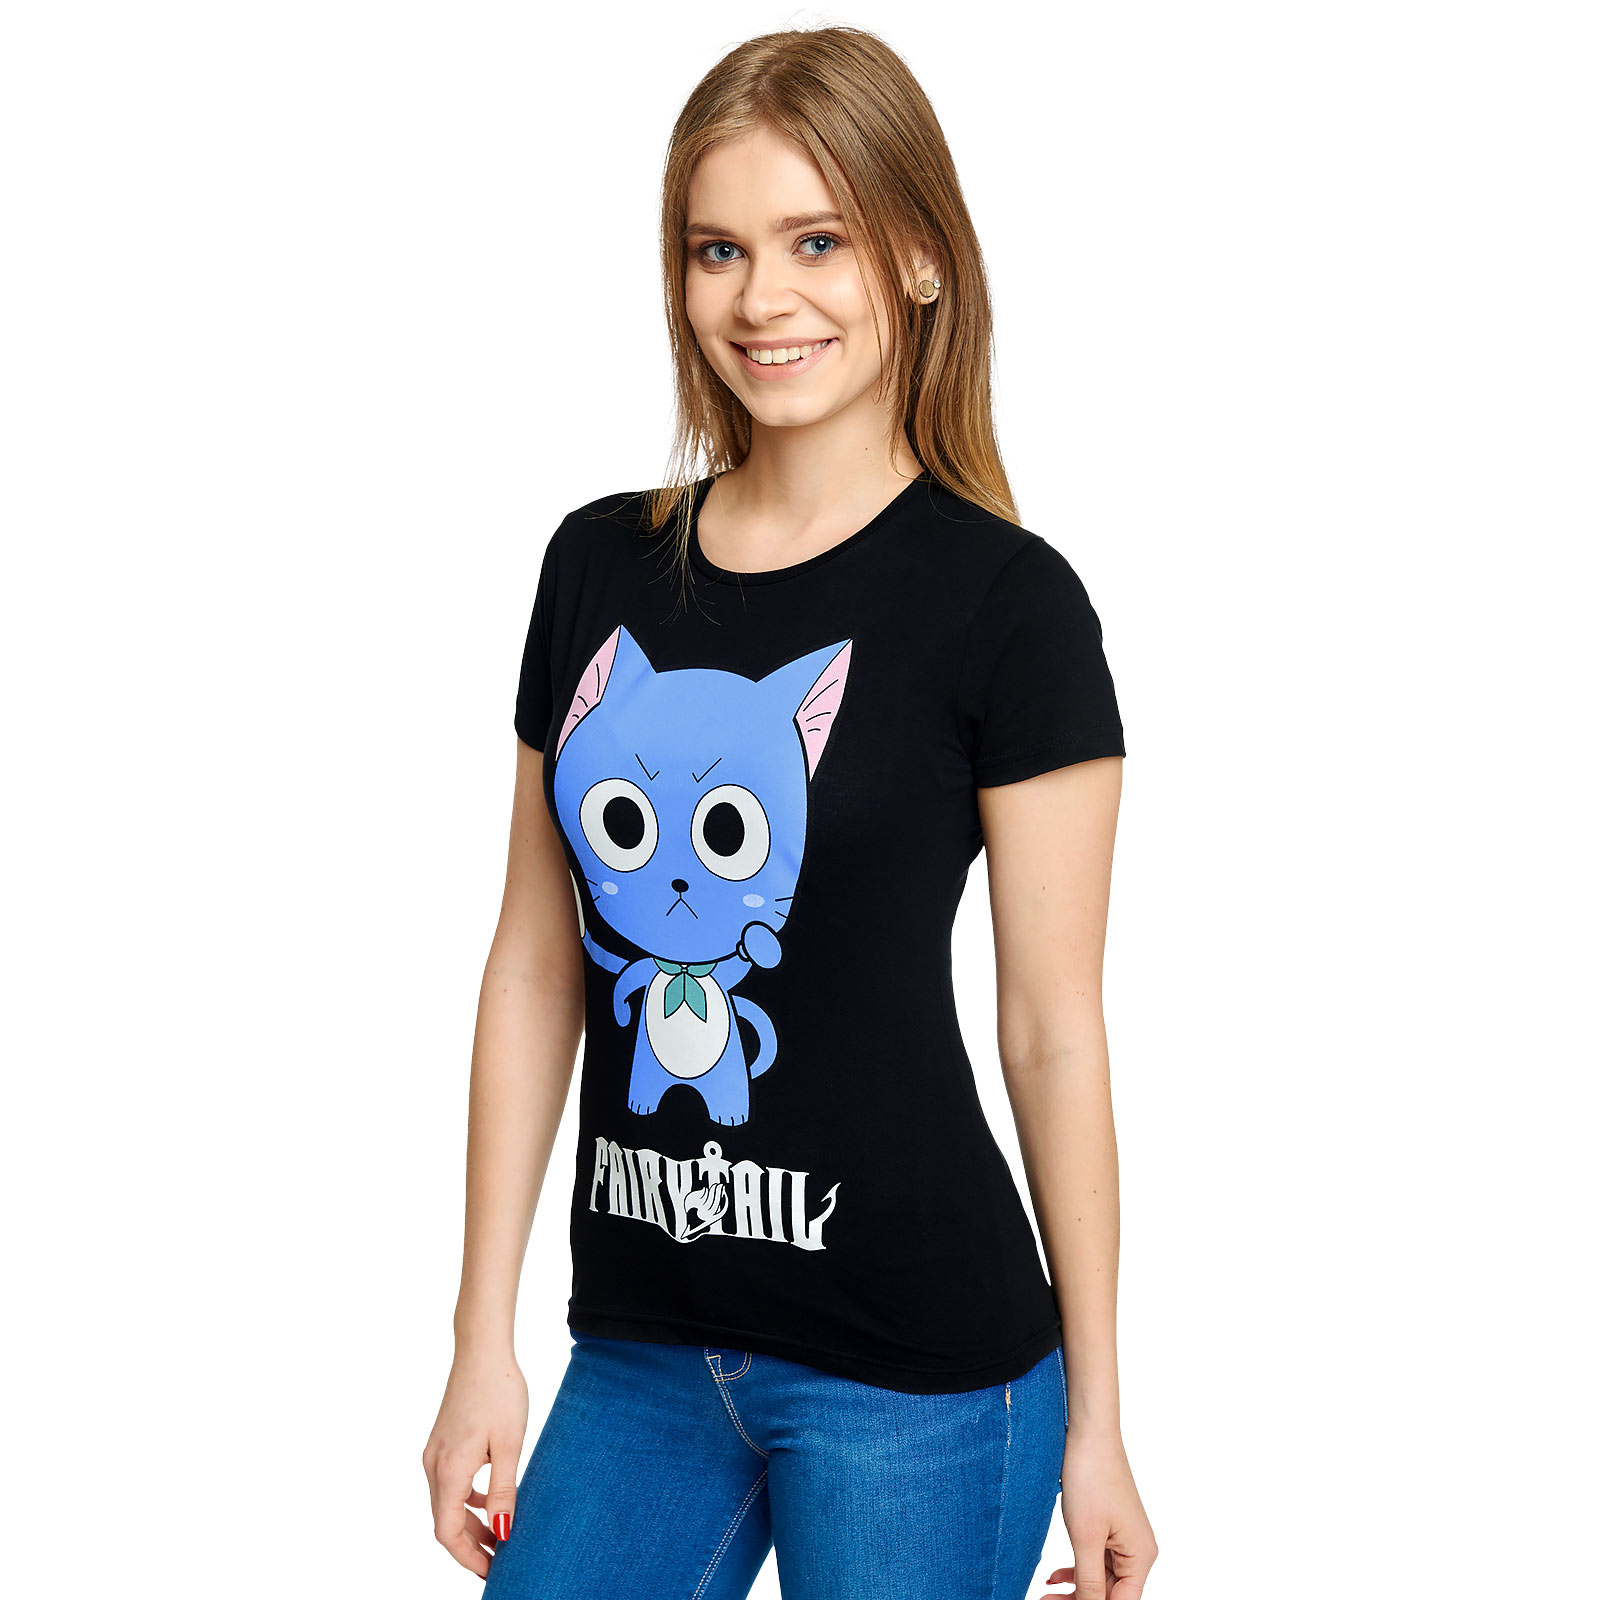 Fairy Tail - Happy Women's T-Shirt Black